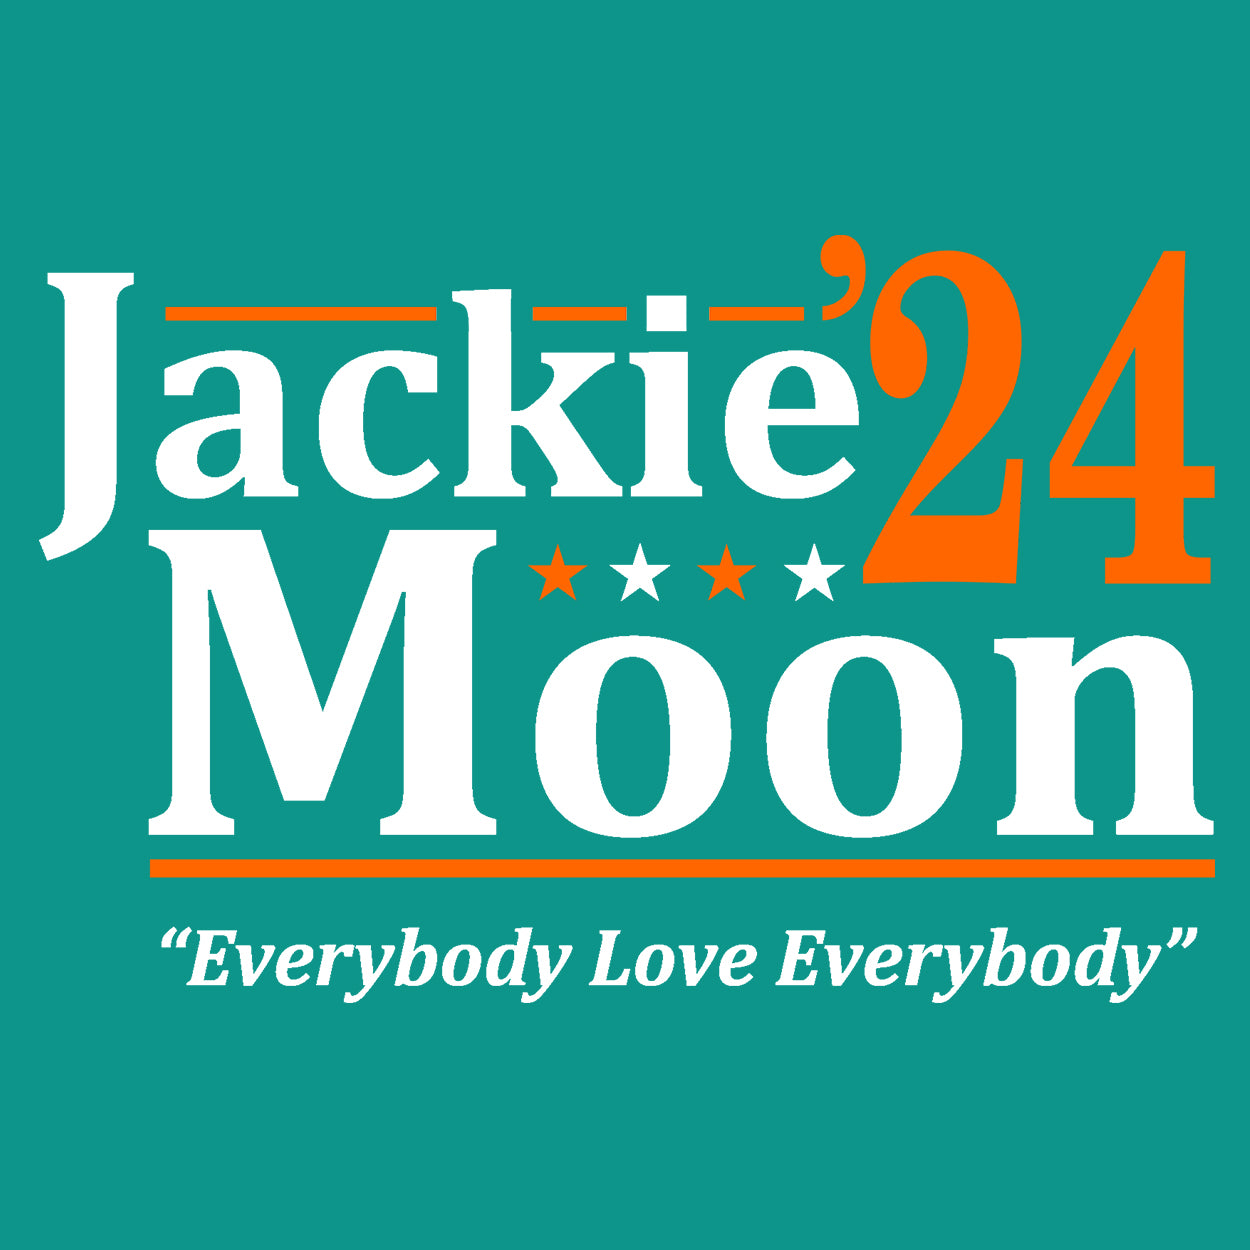 Jackie Moon 2024 Election Tshirt - Donkey Tees